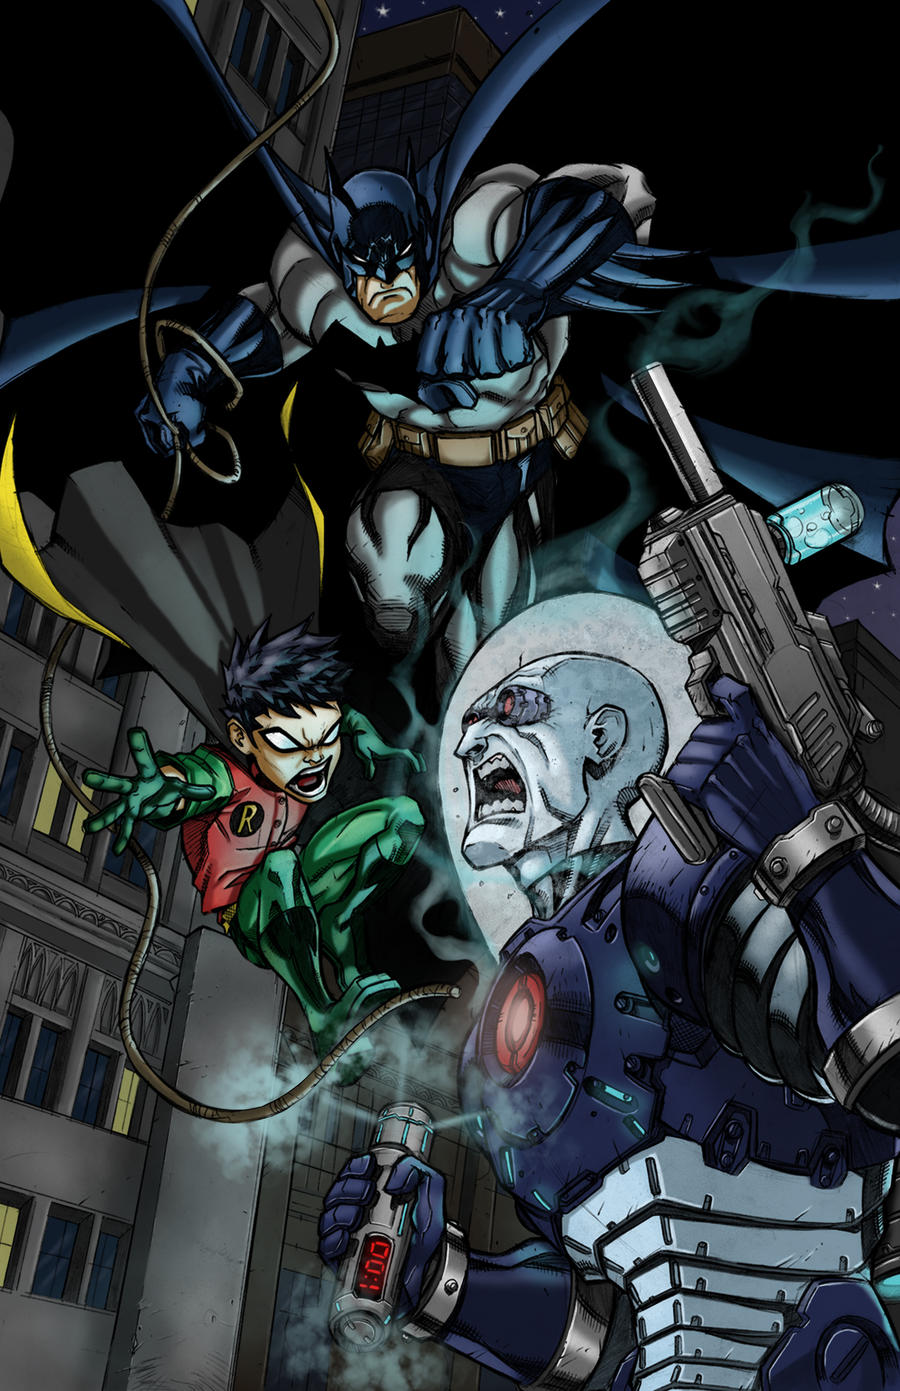 Batman and Robin vs.Mr. Freeze by Jeff-Drylewicz on DeviantArt